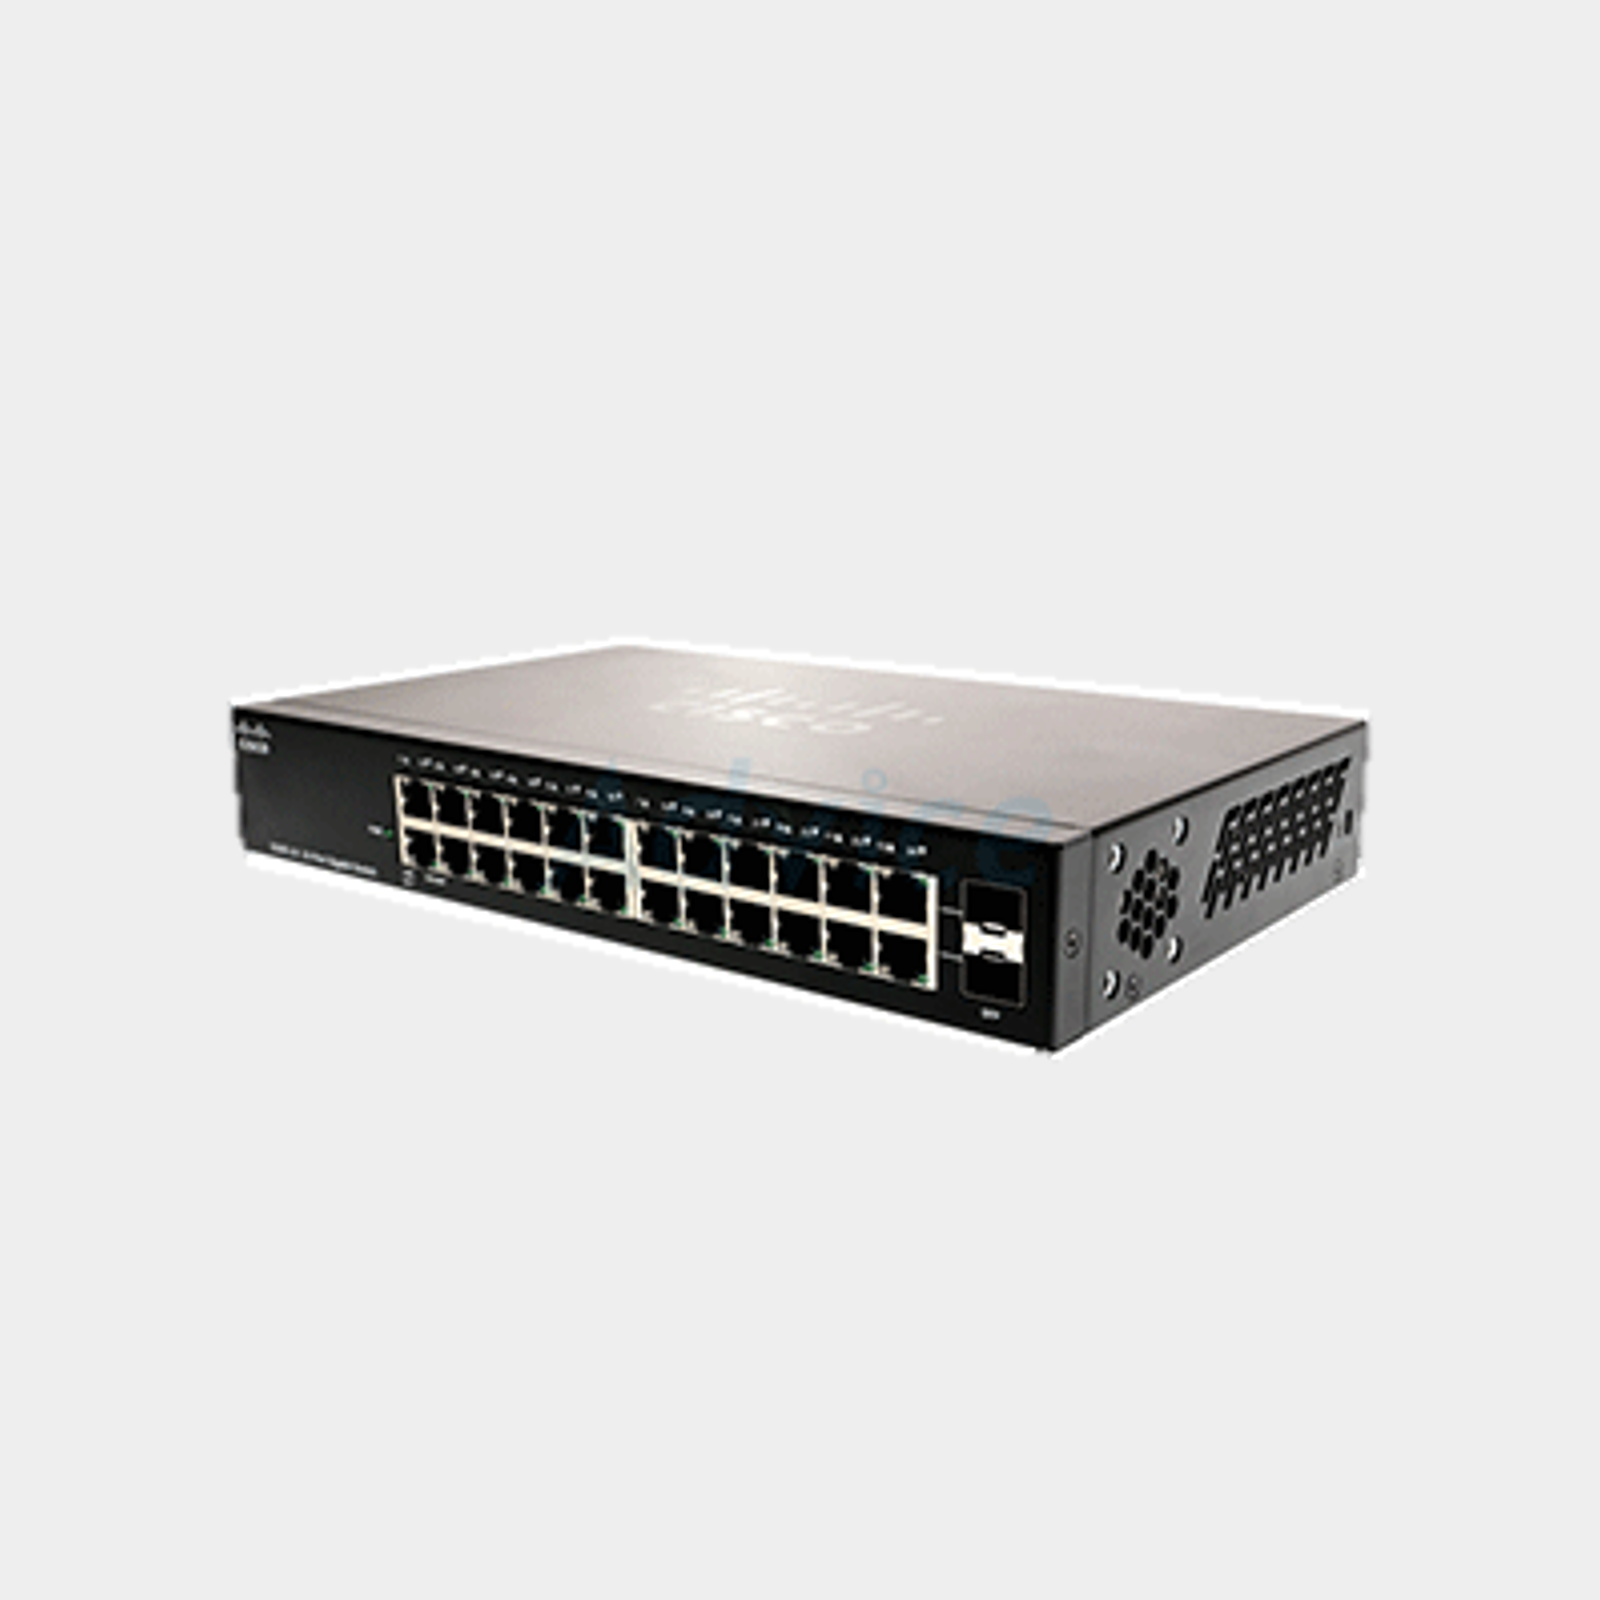 Cisco SG95 Compact 24-Port Gigabit Switch (SG95-24-AS)